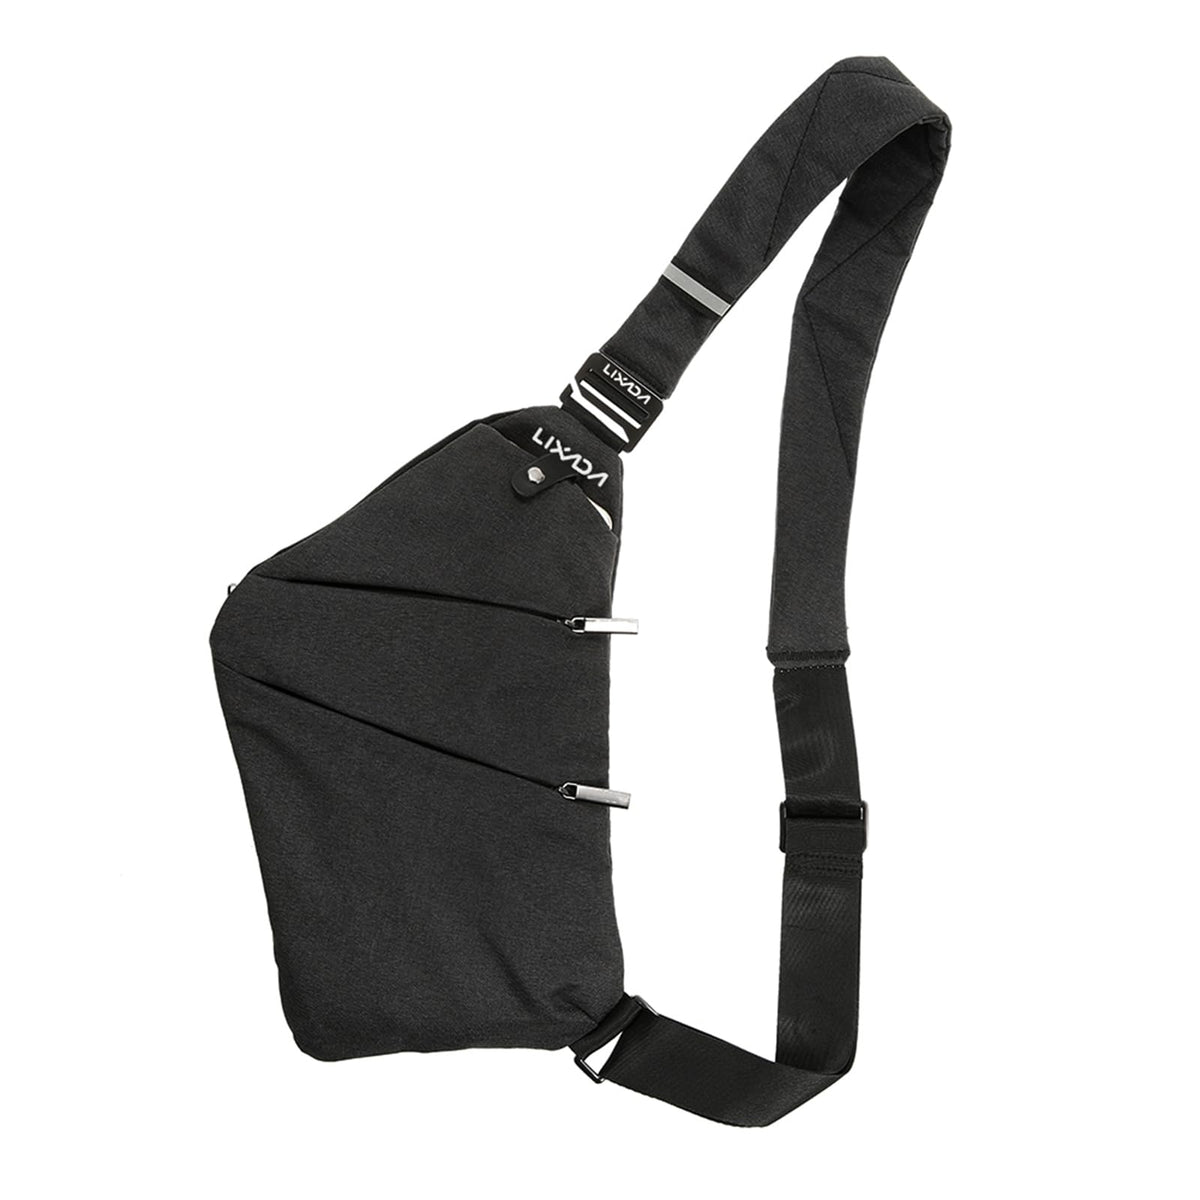 Lixada Sling Backpack Chest Bag Lightweight Outdoor Sport Travel Hiking Anti Theft Crossbody Shoulder Pack Bag Daypack for Men Women (Black)